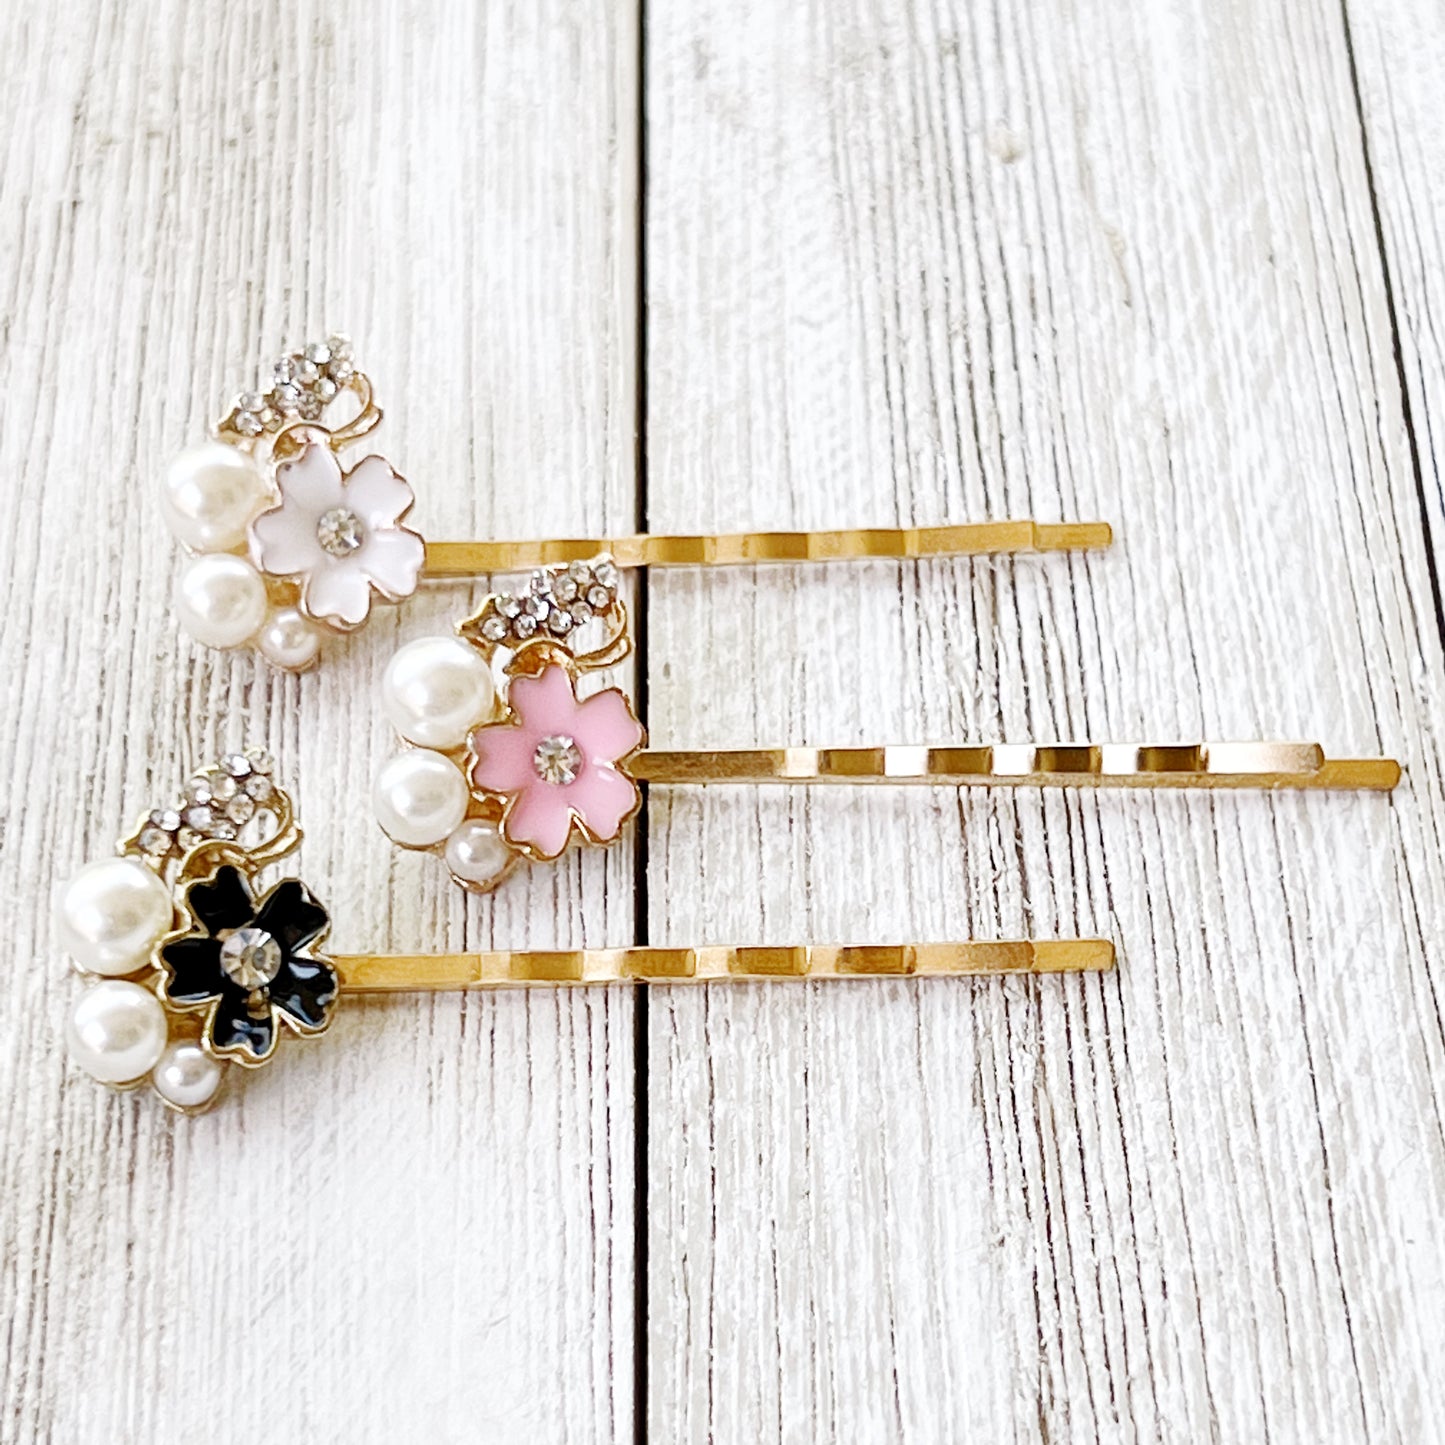 Black, White & Pink Enamel and Rhinestone Flower Hair Pins Set of 3 - Elegant and Versatile Hair Accessories